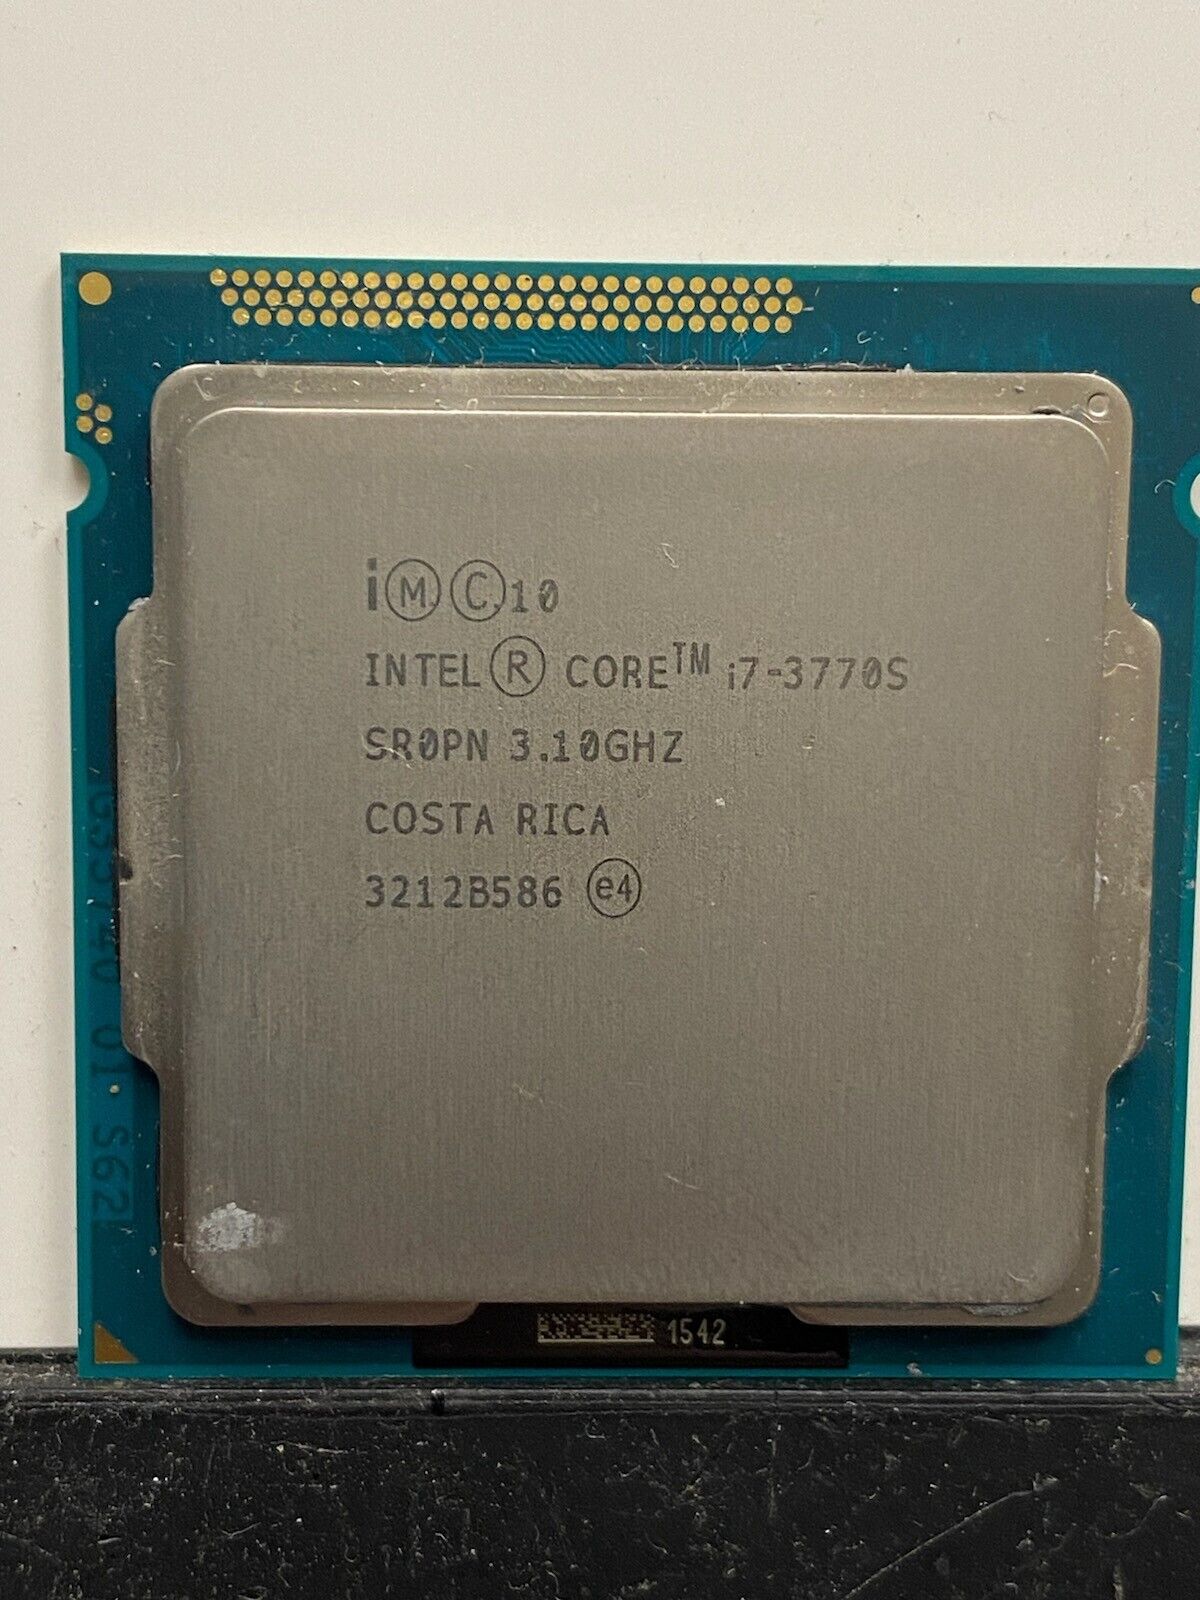 Intel Core i7-3770S(SR0PN) @ 3.10GHz /8MB / Socket 1155/ PROCESSOR ONLY